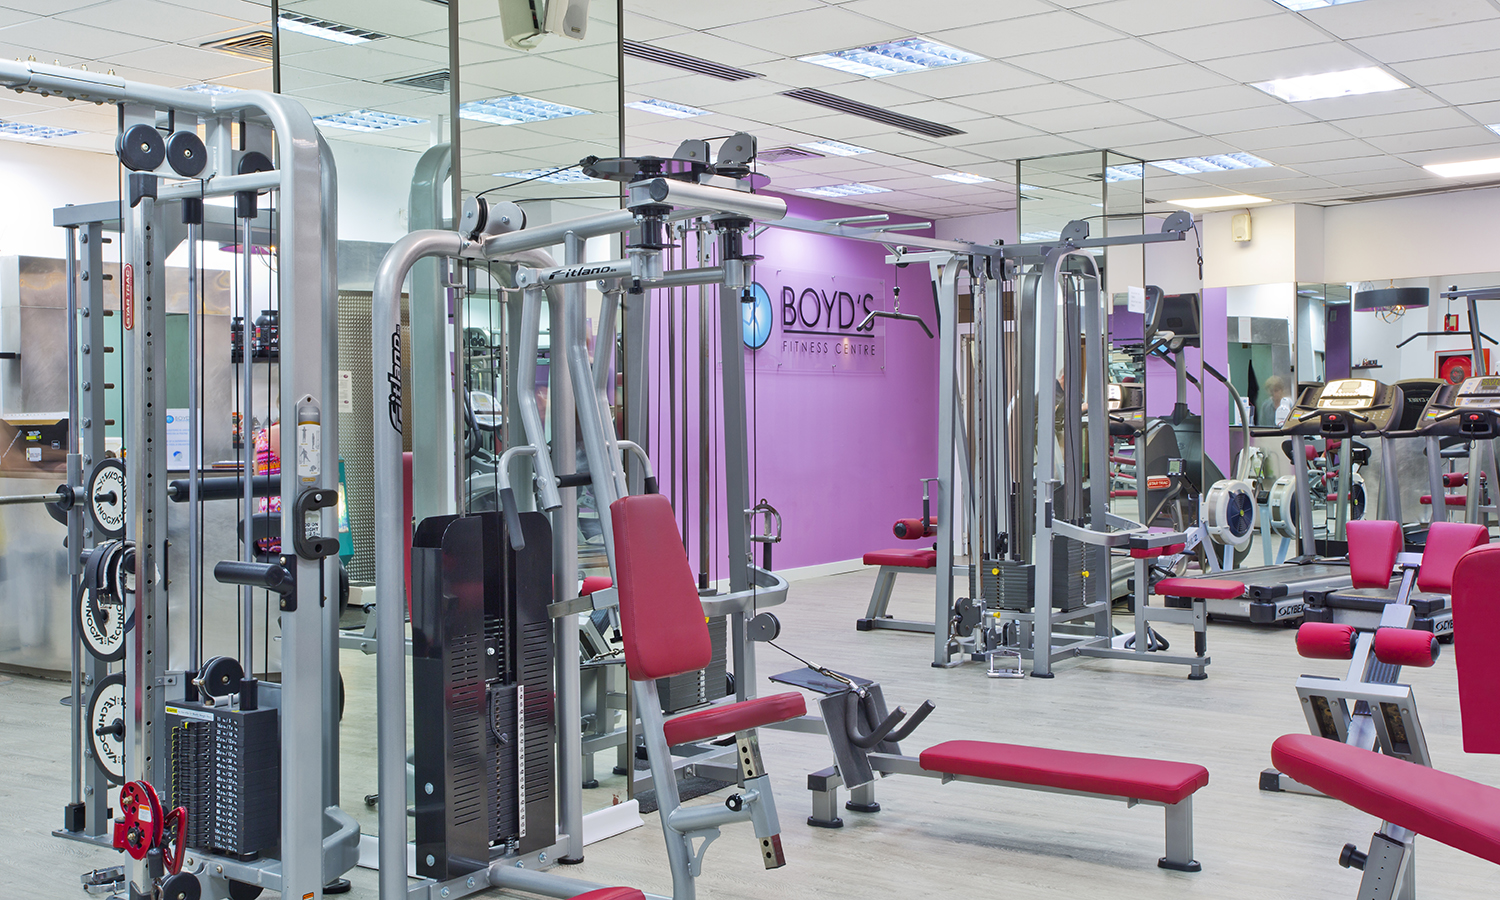 Boyd's Fitness Centre (fee applies)